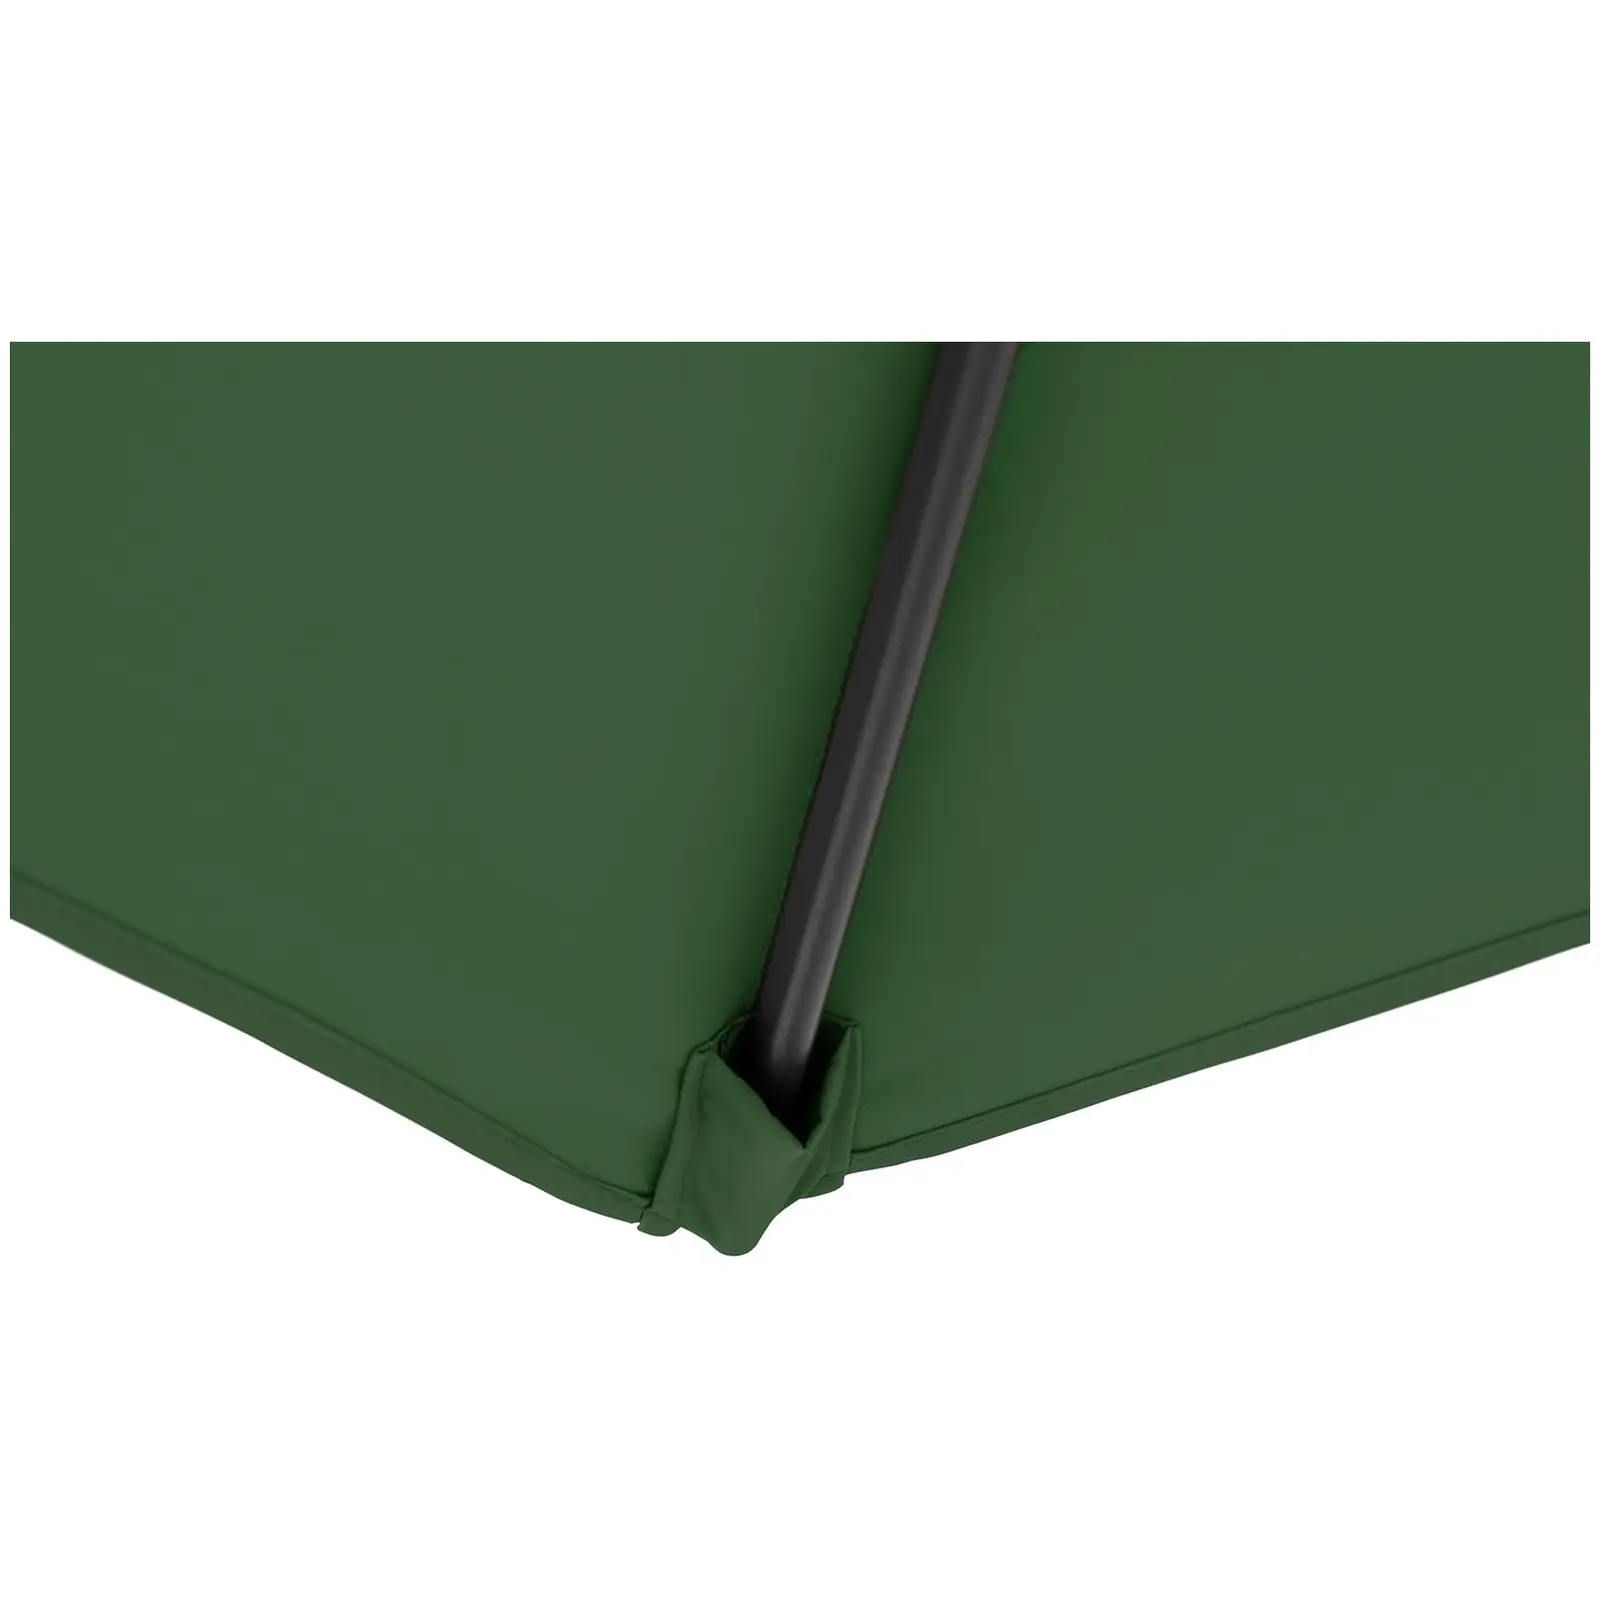 Ombrellone palo centrale grande - Verde - Esagonale - Ø 270 cm